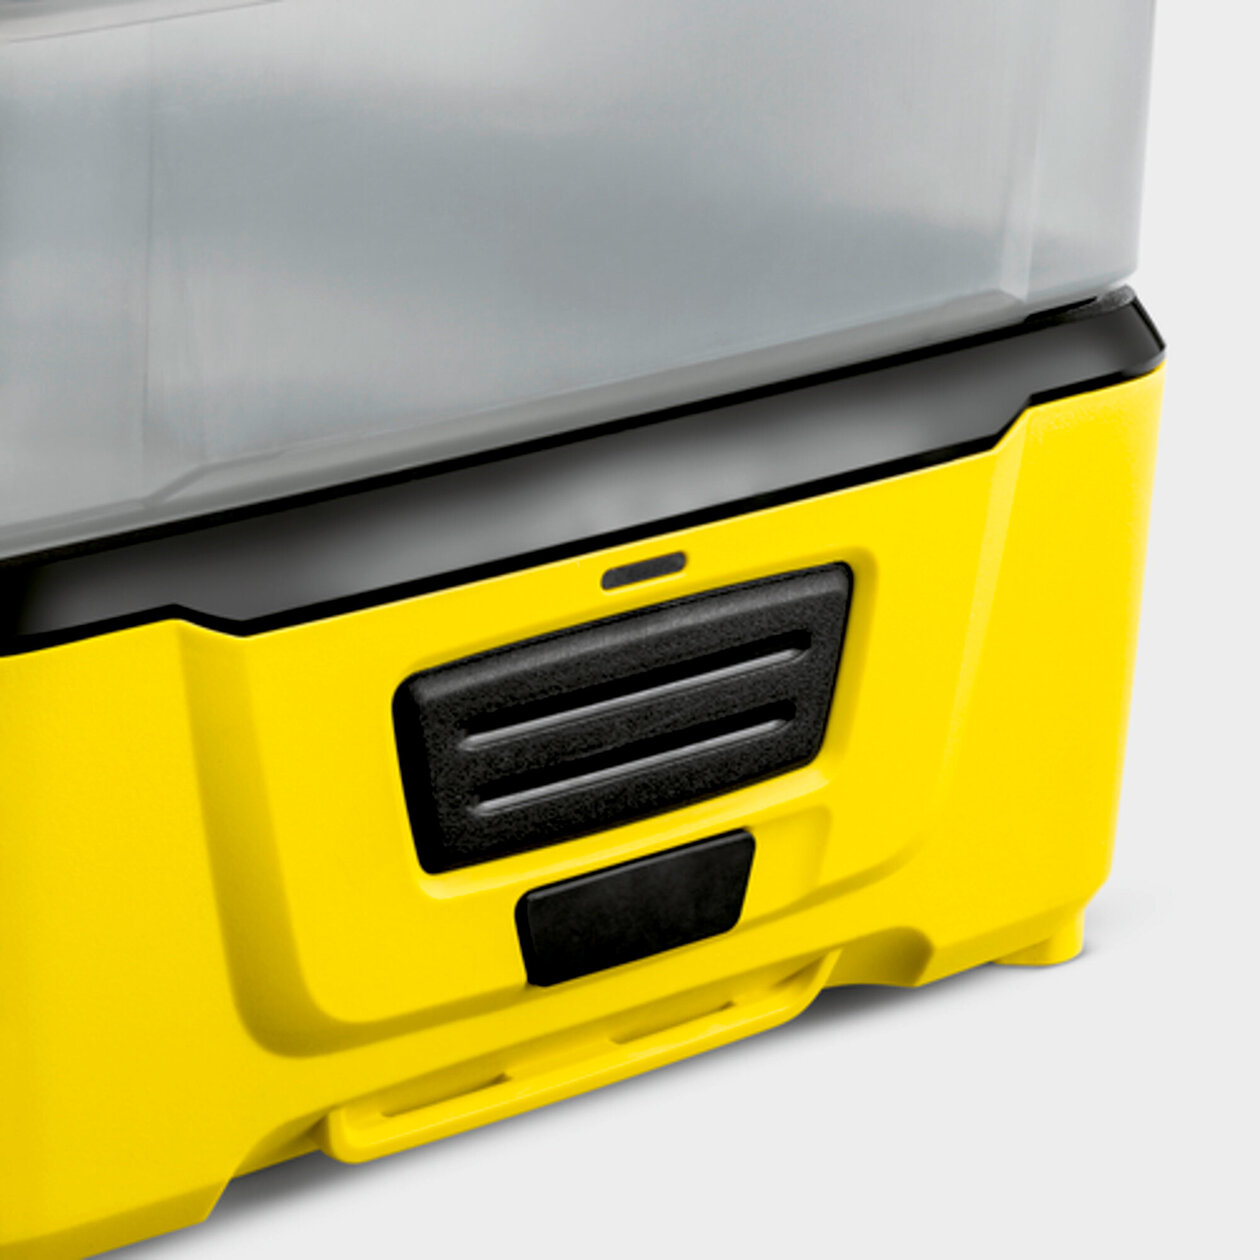 Mobilní outdoorová myčka OC 3 Plus: Integrovaná lithium-iontová baterie